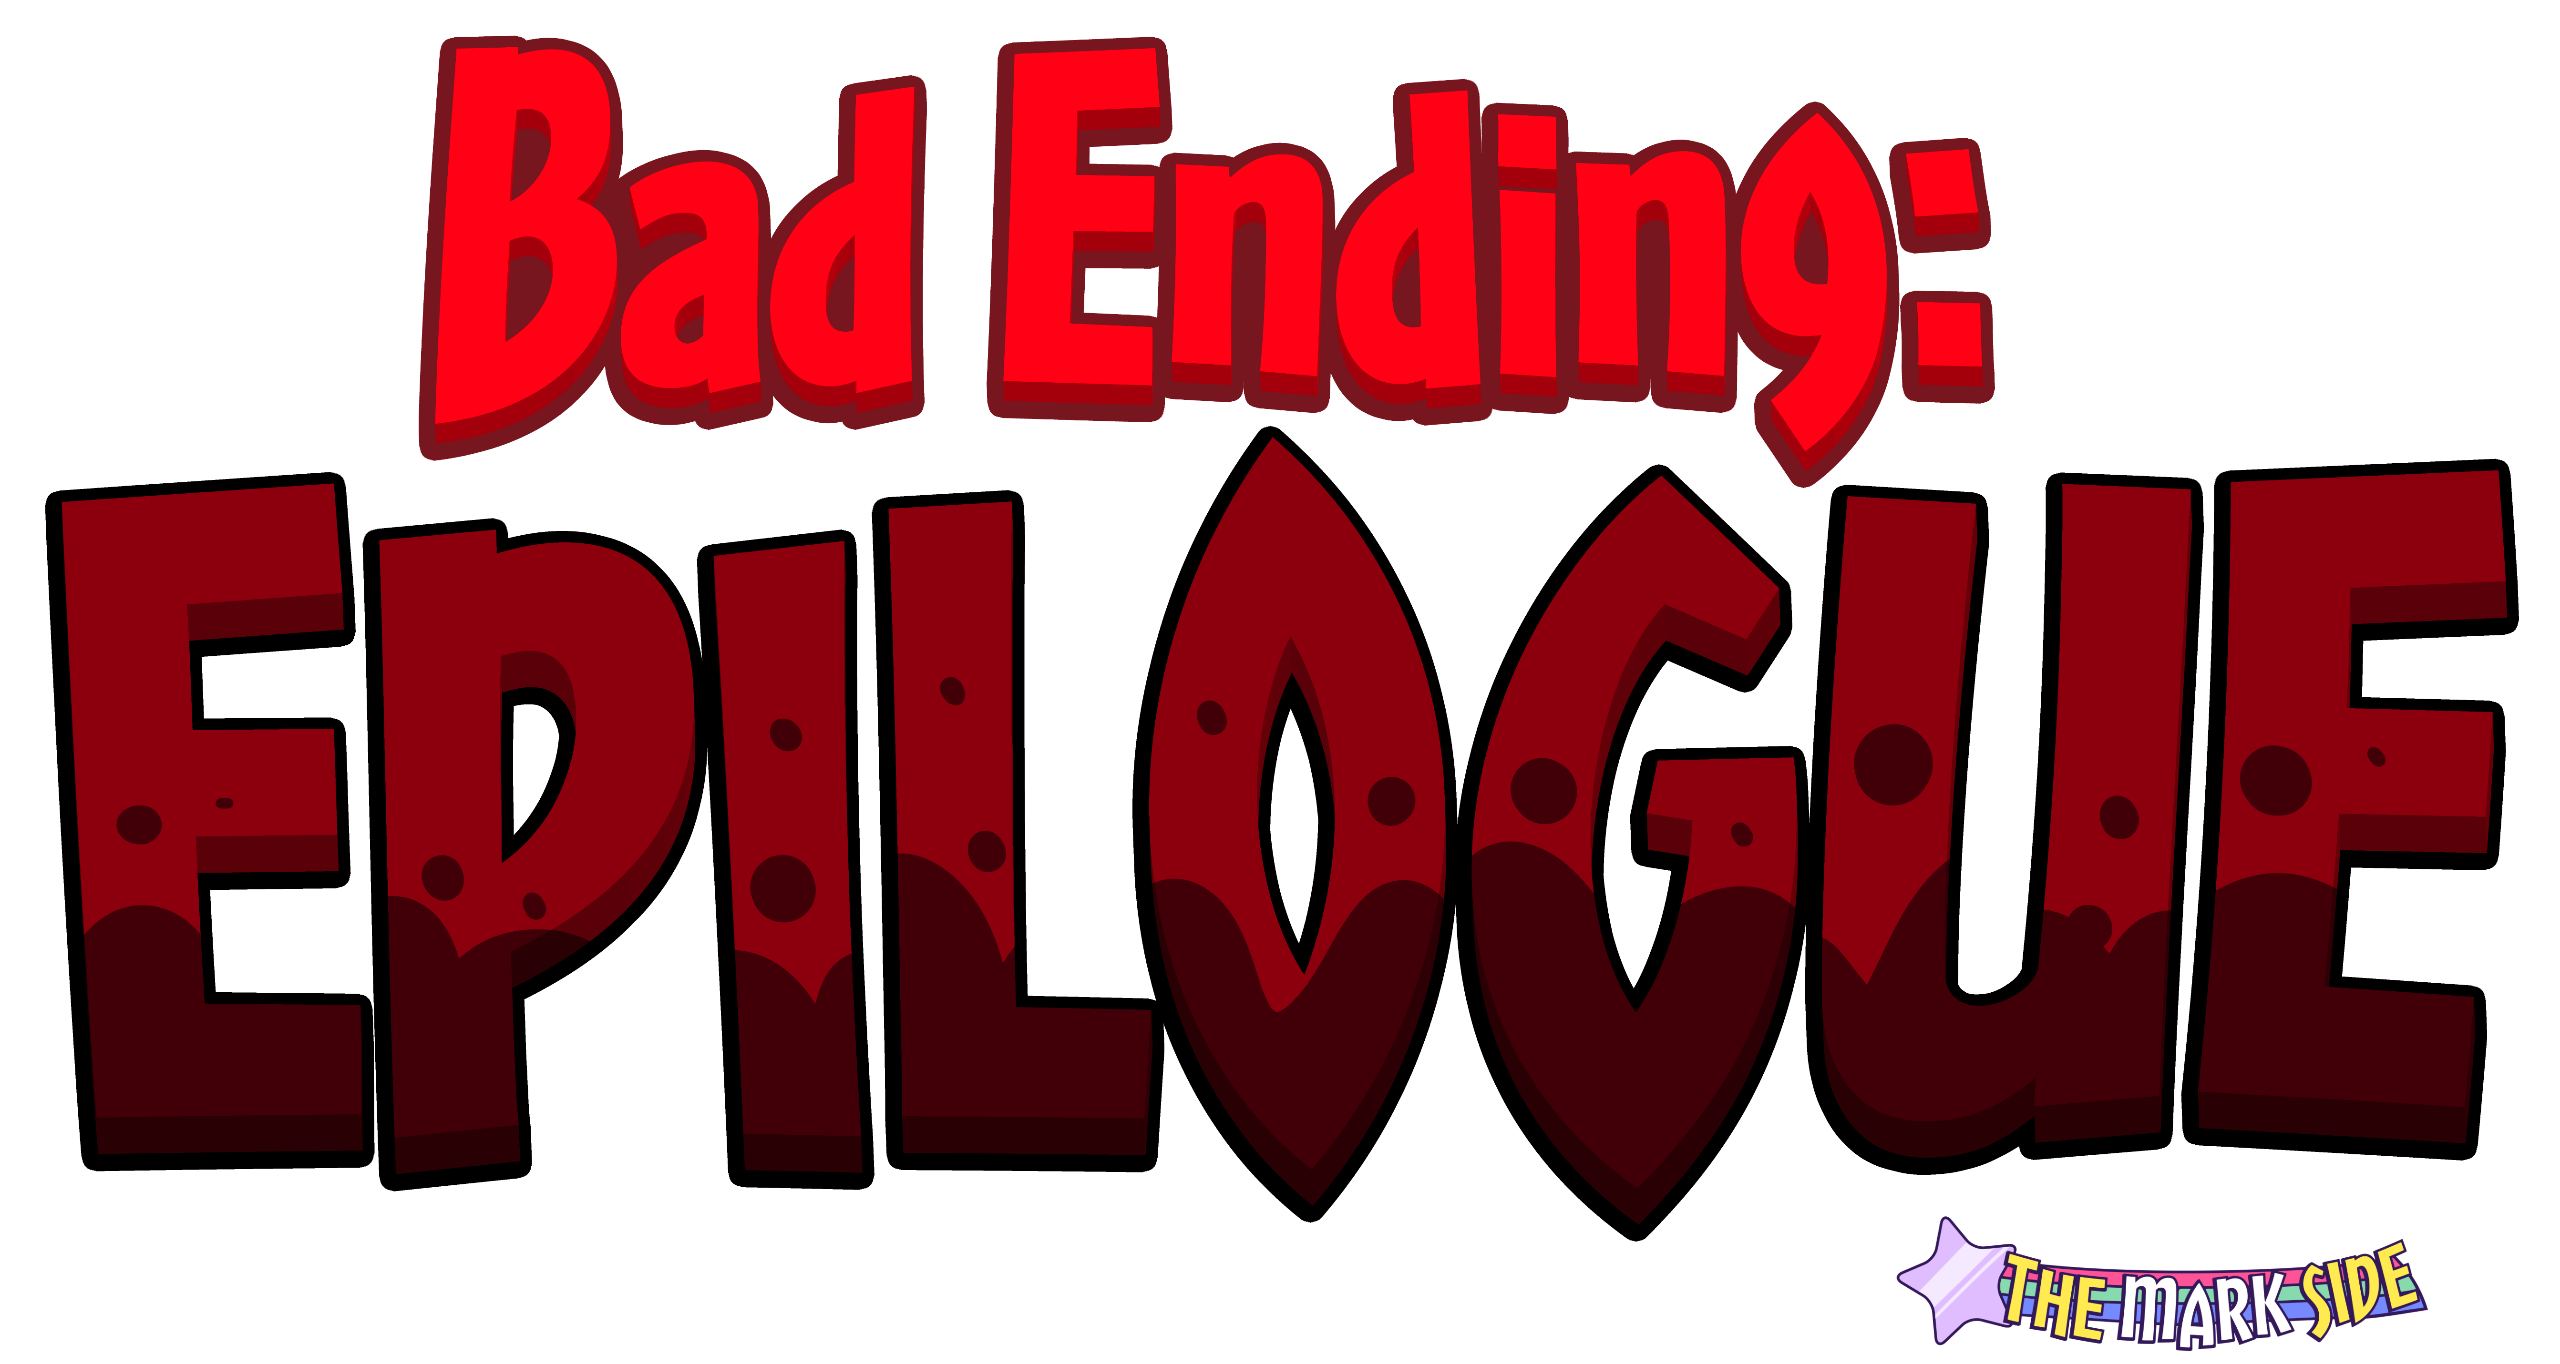 Bad Ending: Epilogue